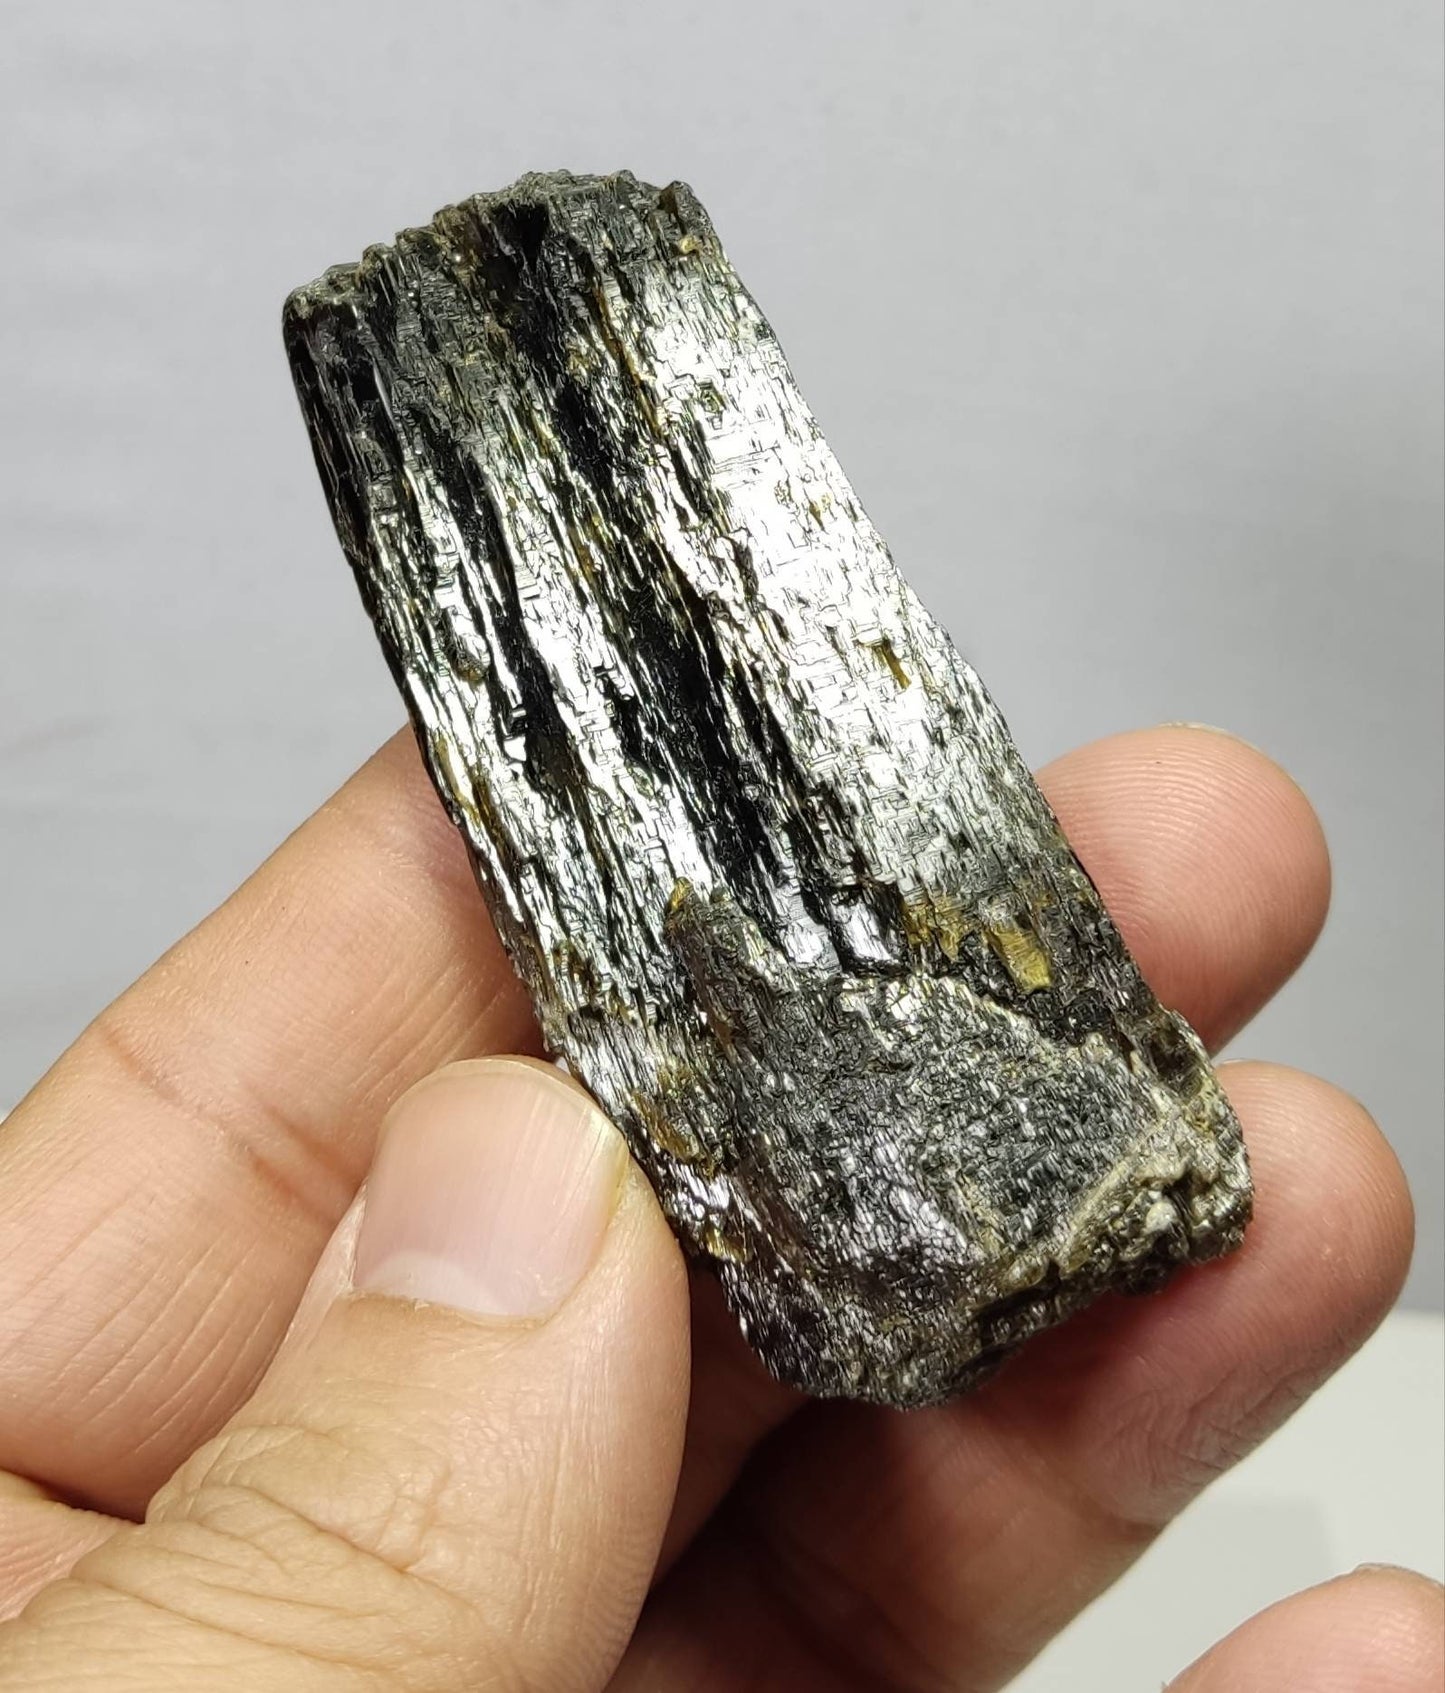 Epidote crystal 59 grams